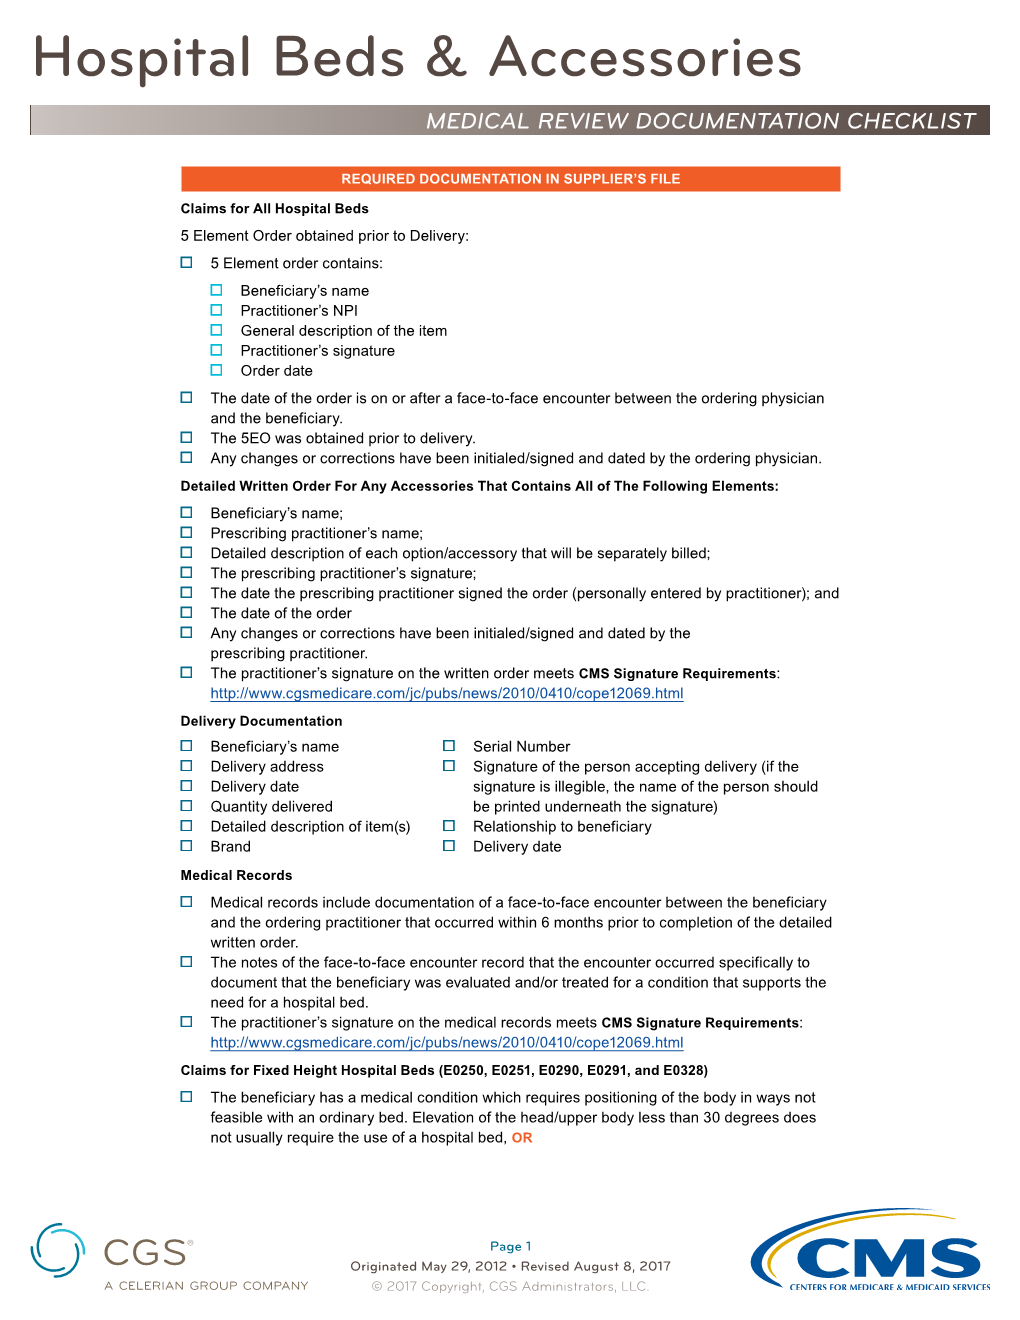 Hospital Beds Medical Review Documentation Checklist